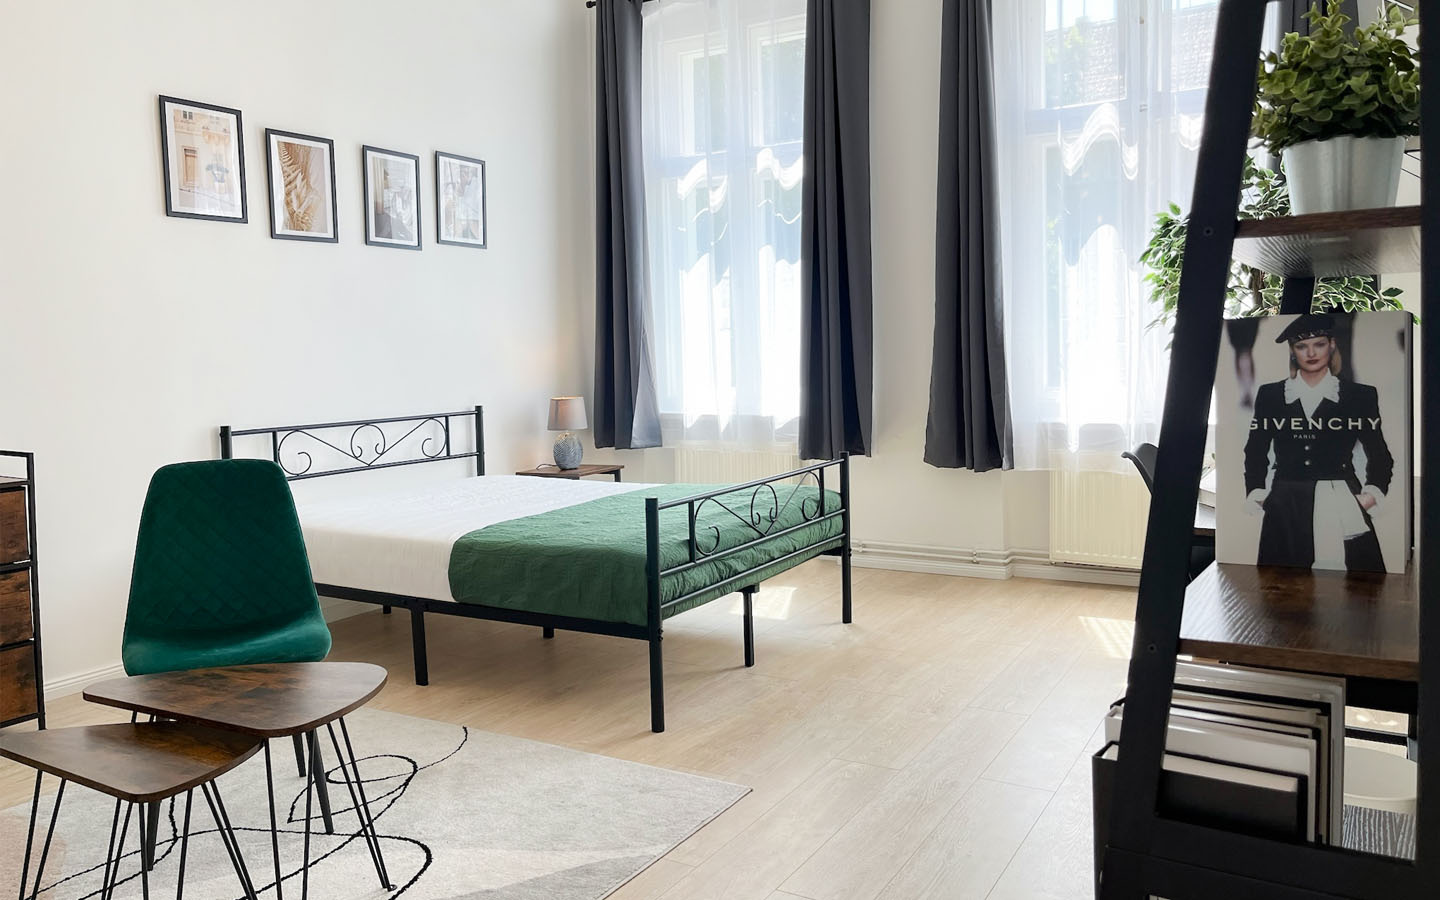 Private Room for rent in Berlin Lichtenberg